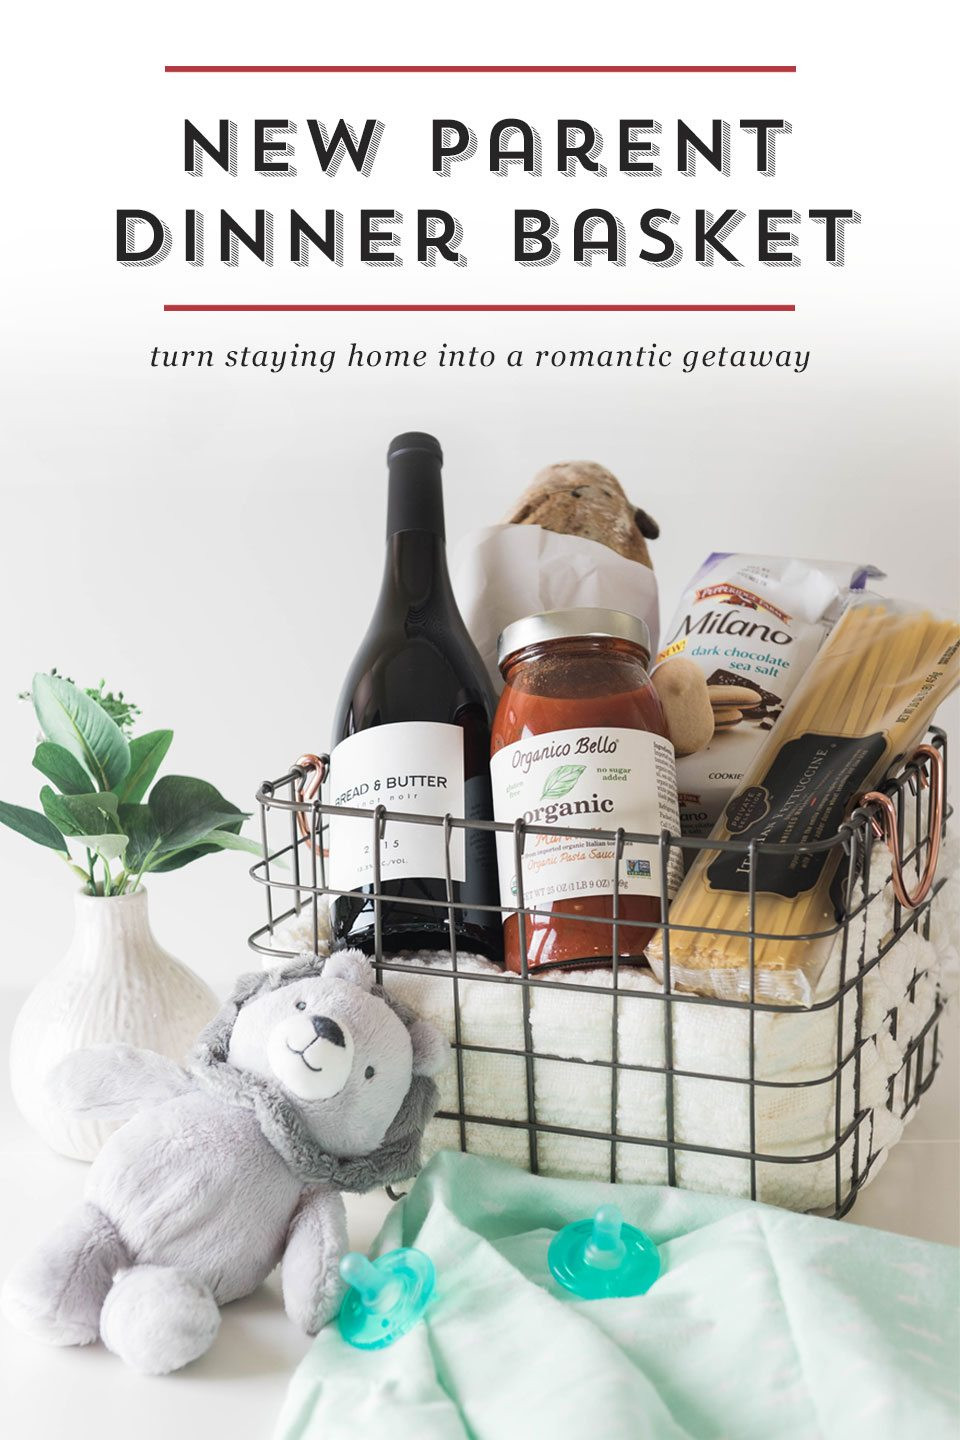 Gift Basket Ideas For Parents
 DIY Date Night Gift Basket